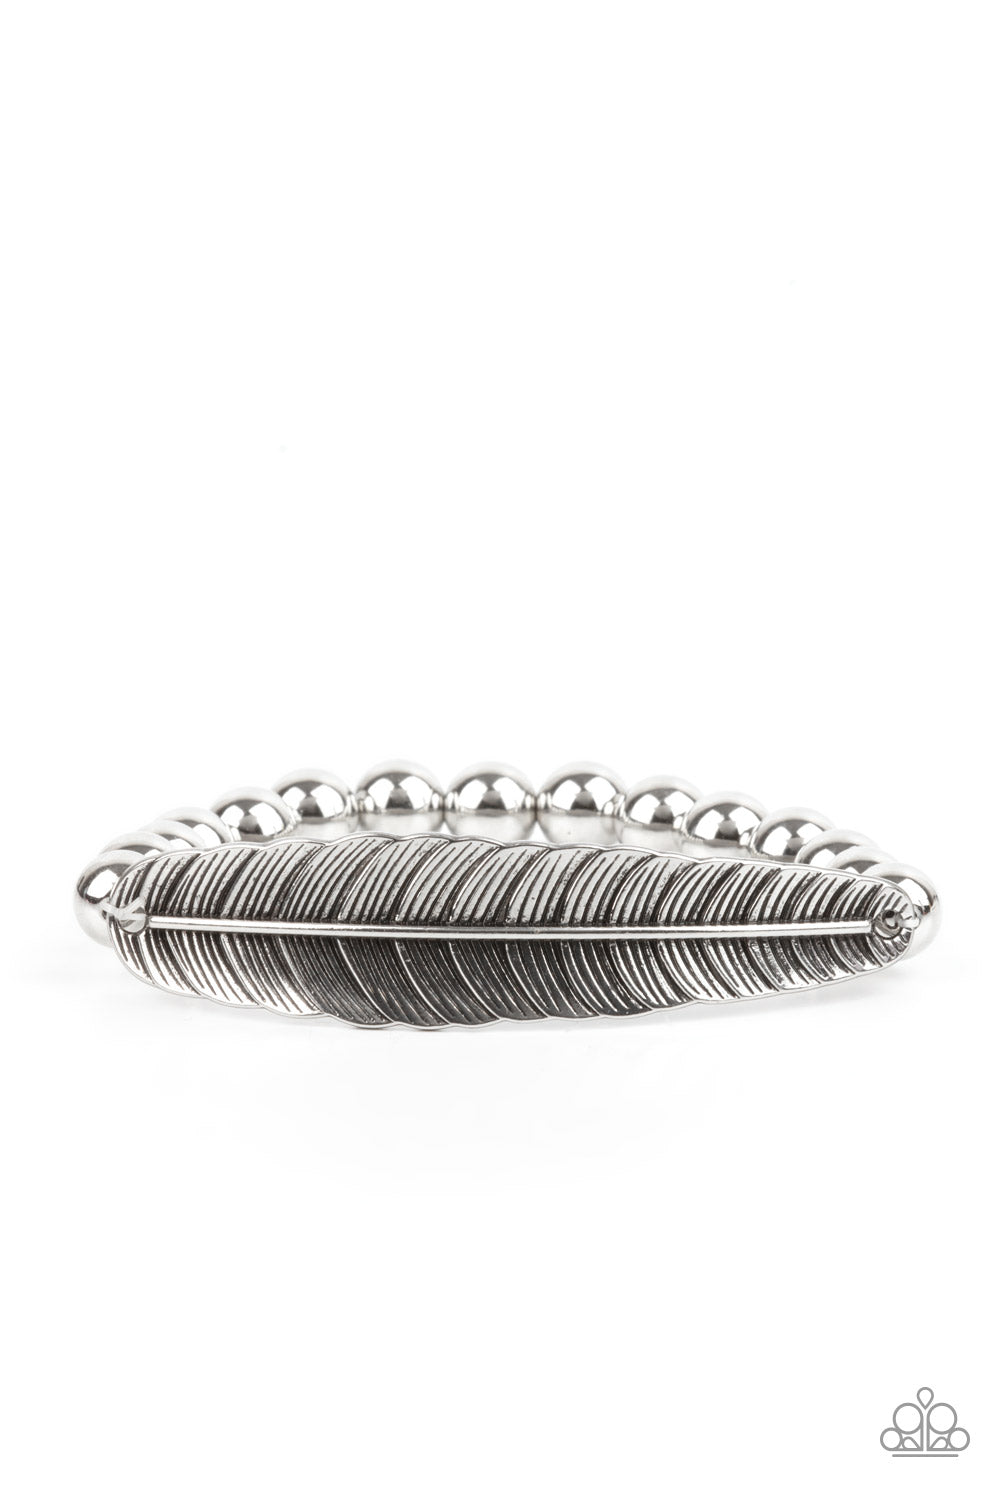 Featherlight Fashion Silver Bracelet